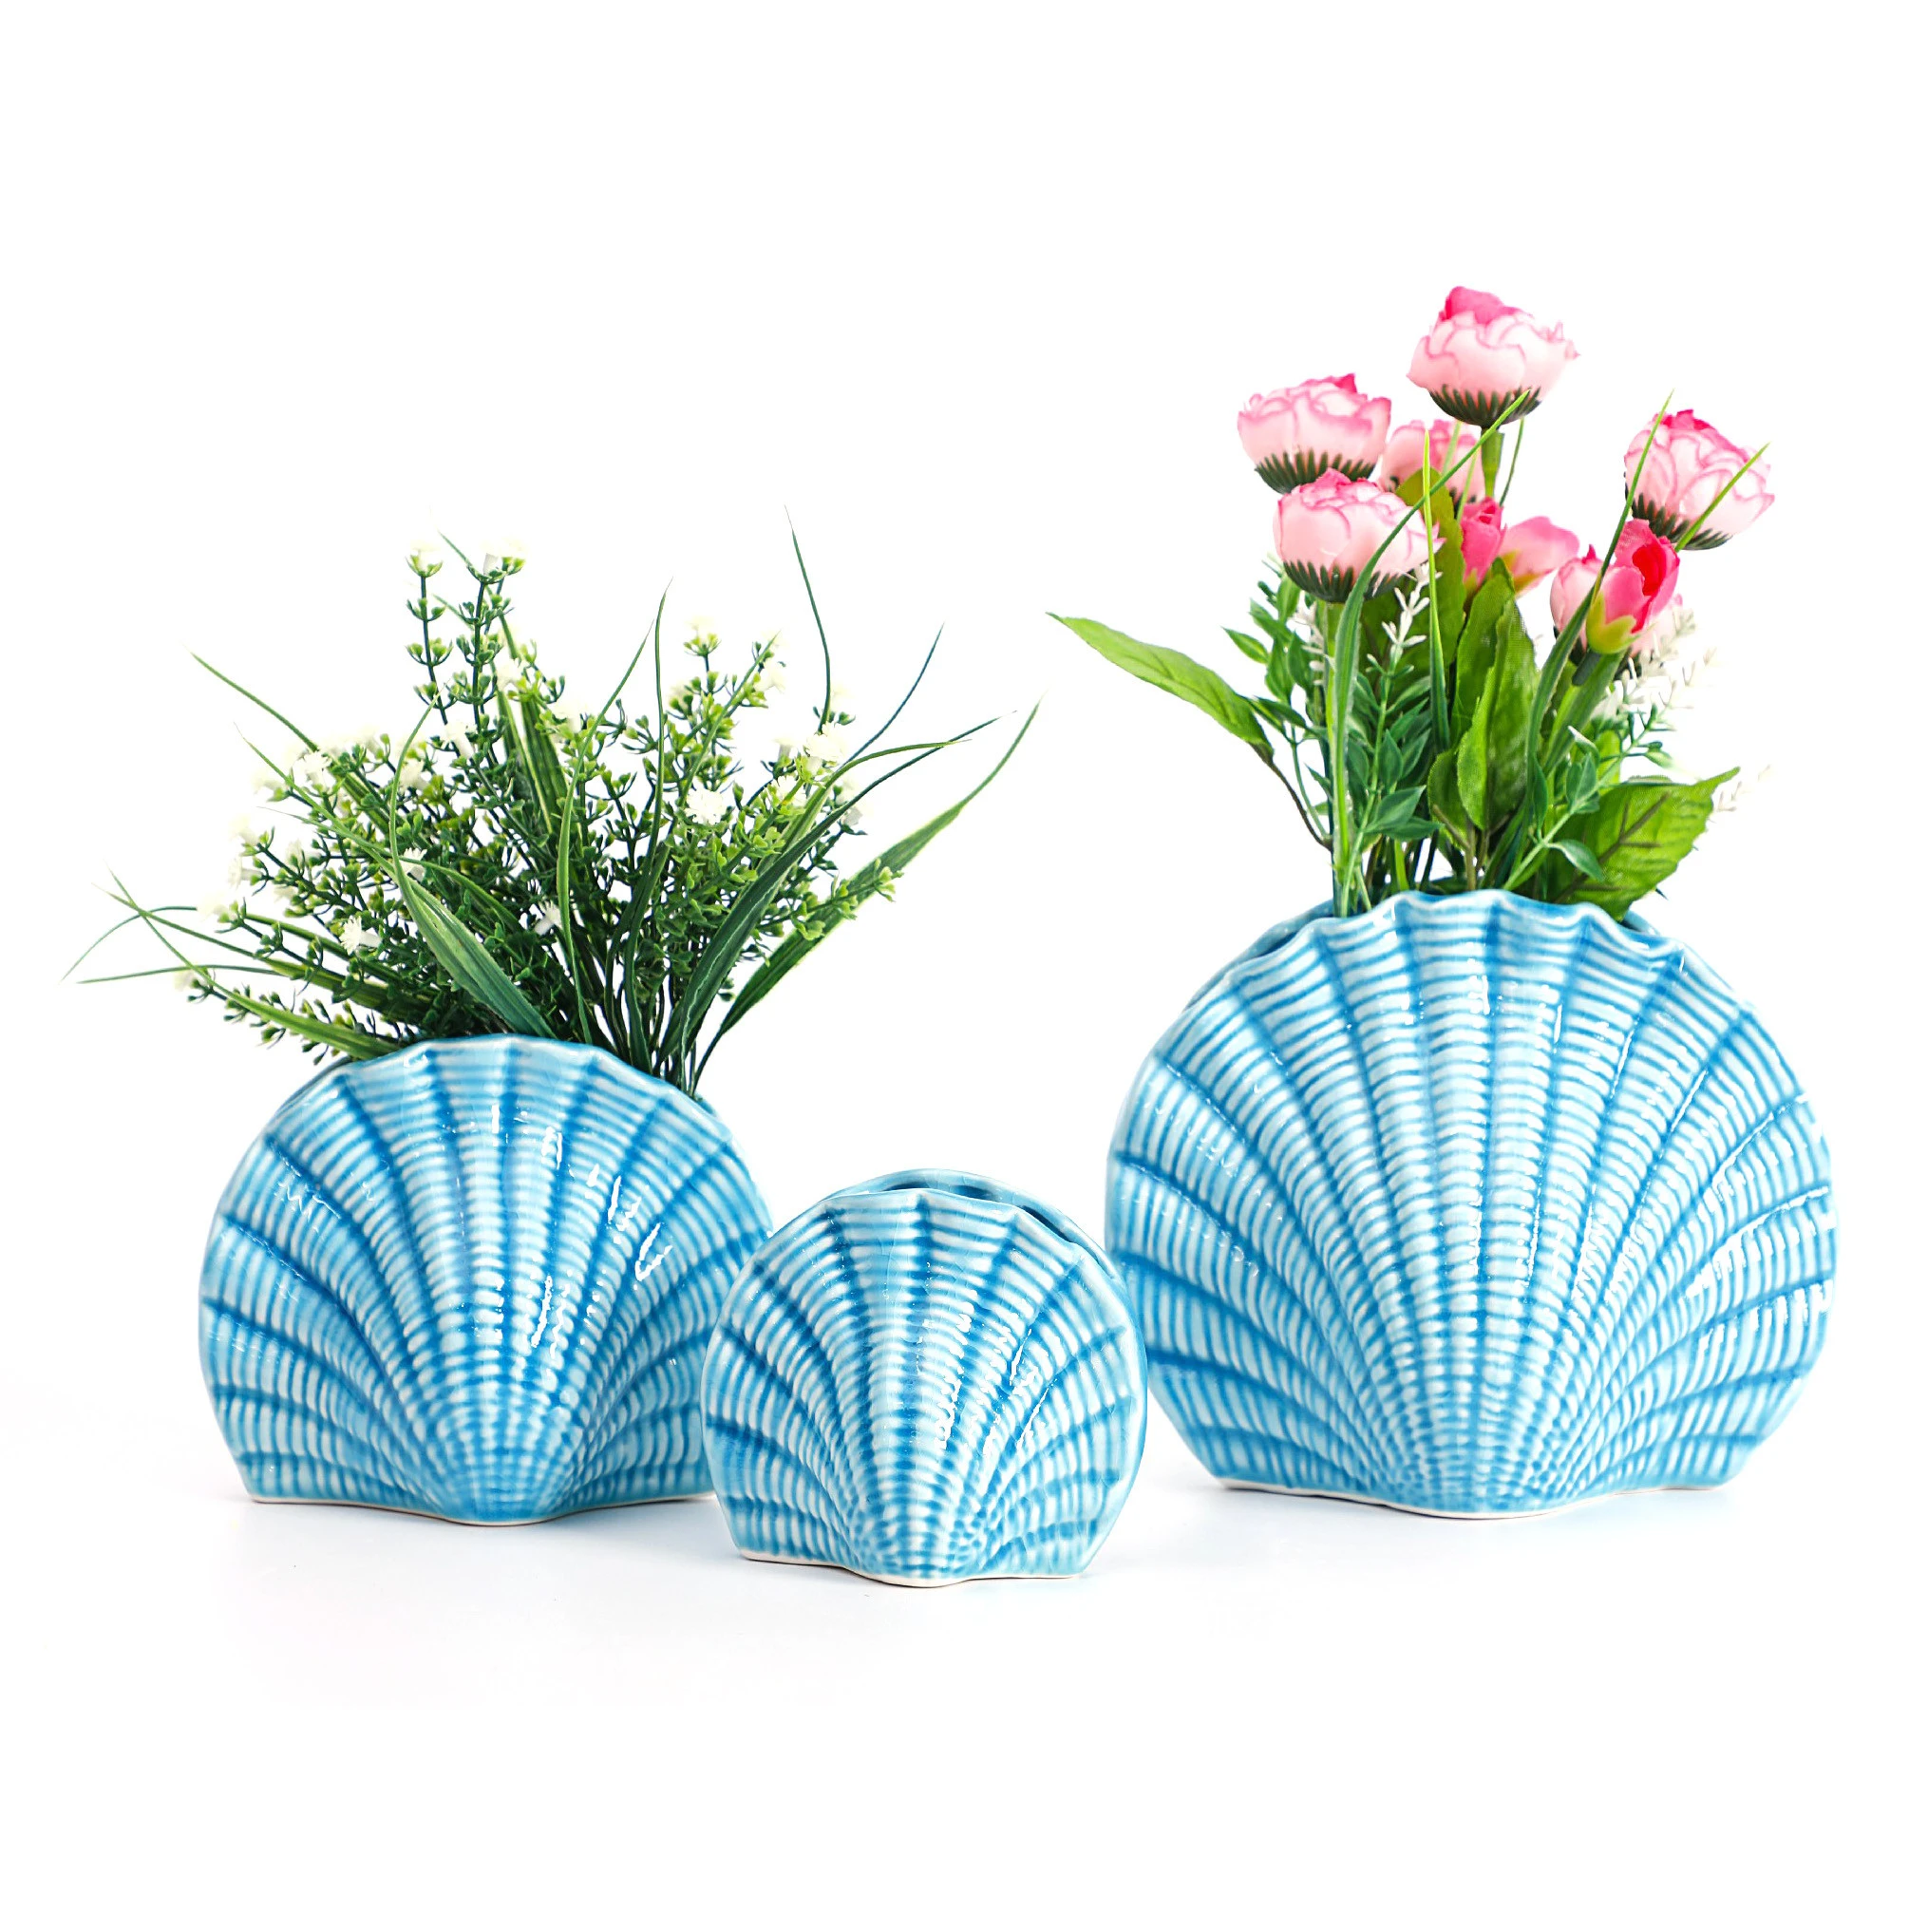 Creative Ceramic Flower Vase, Elegant Decorative Flower Vase for Home Decor Living Room, Office,Table and Wedding,Centerpieces